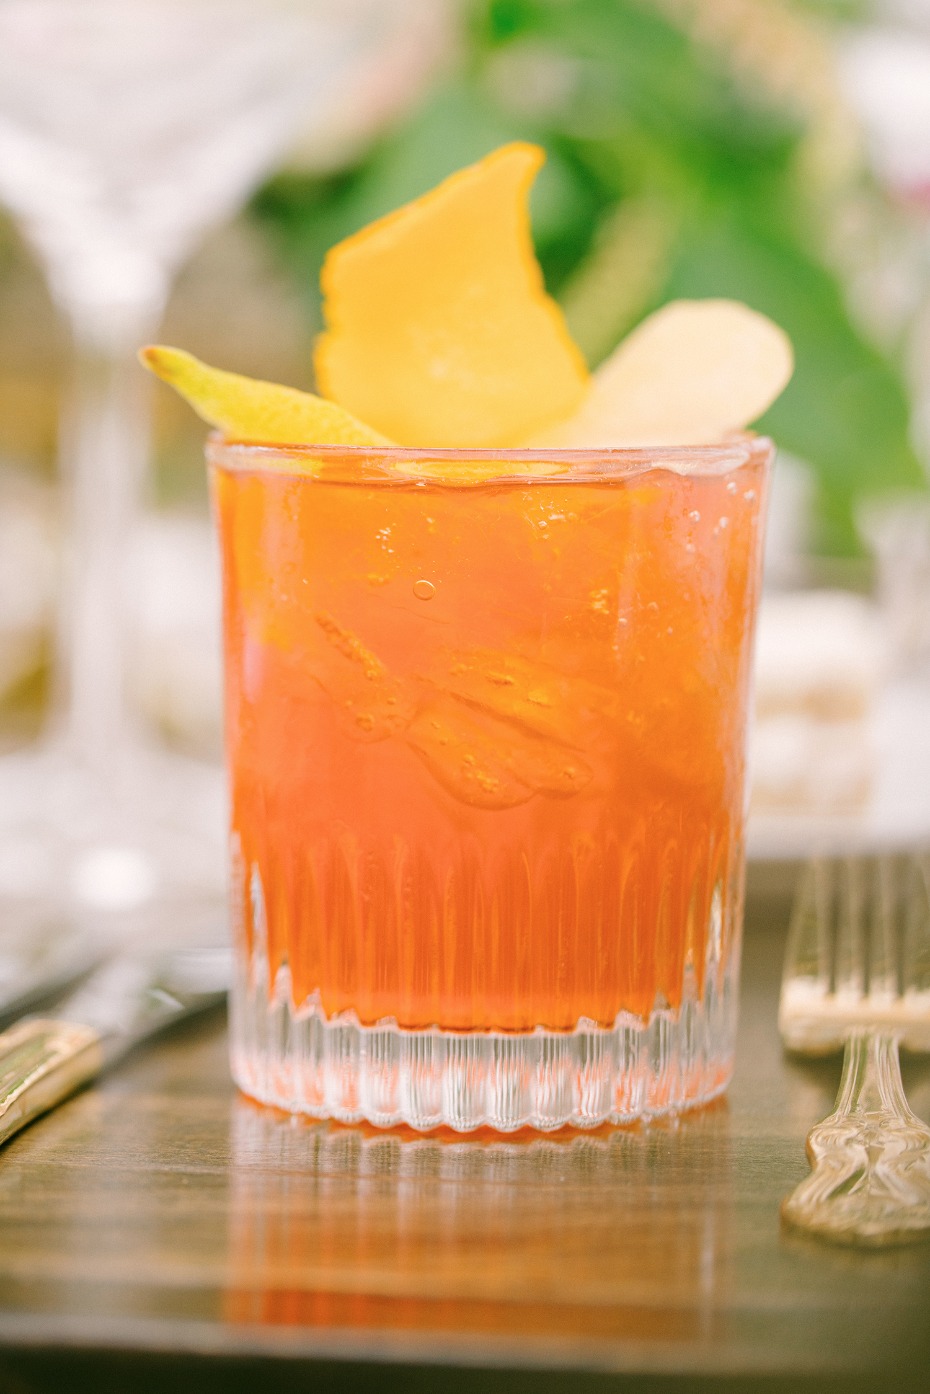 the orange cocktail